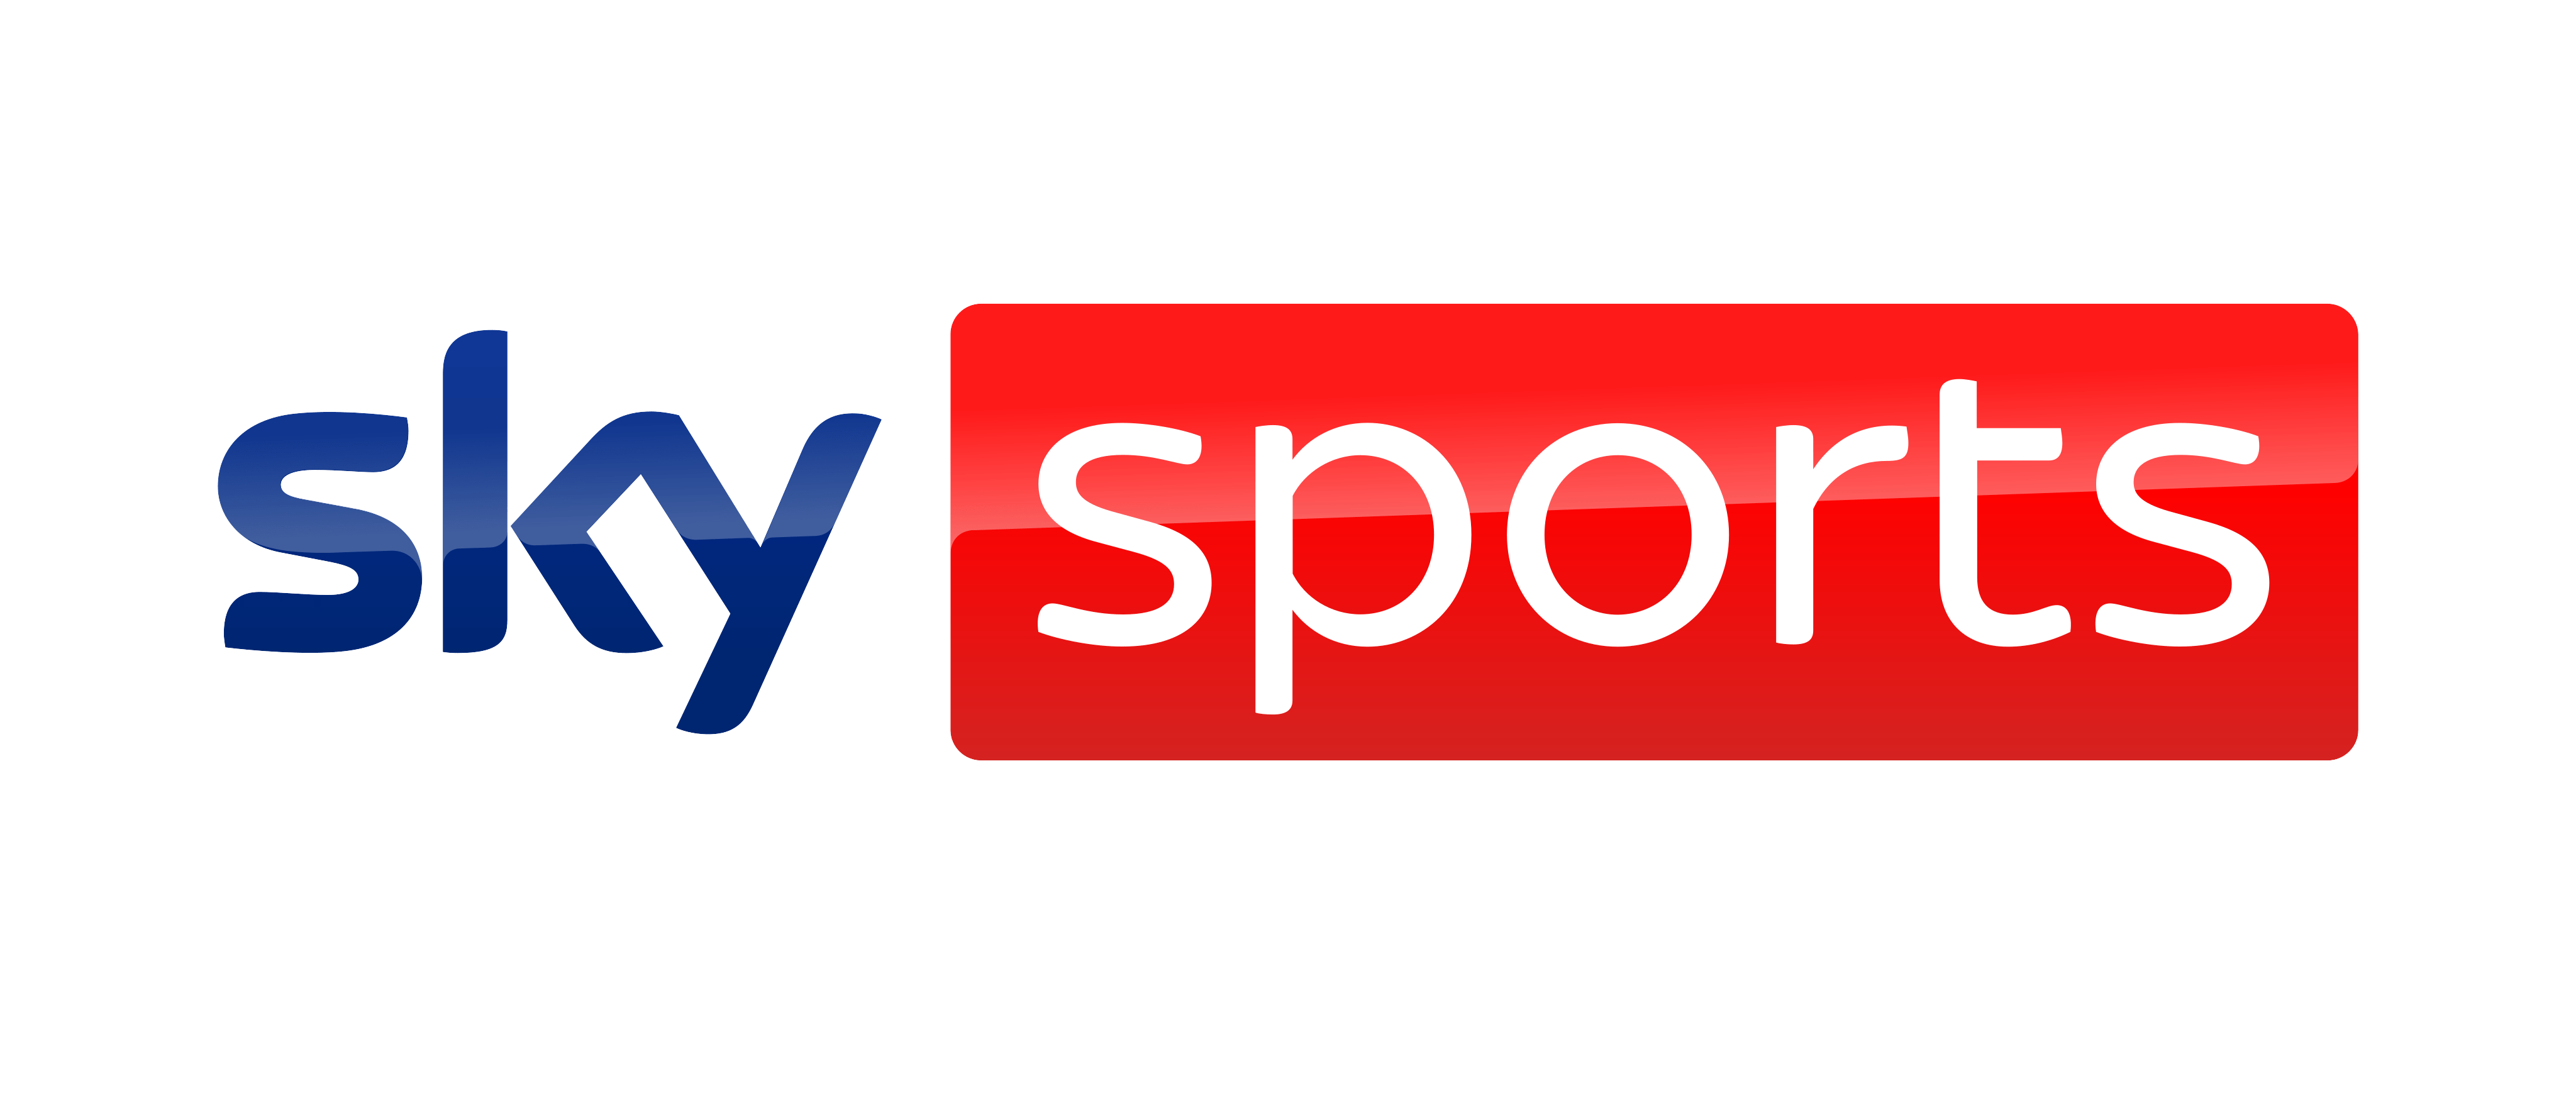 sky-sports-logo.png2